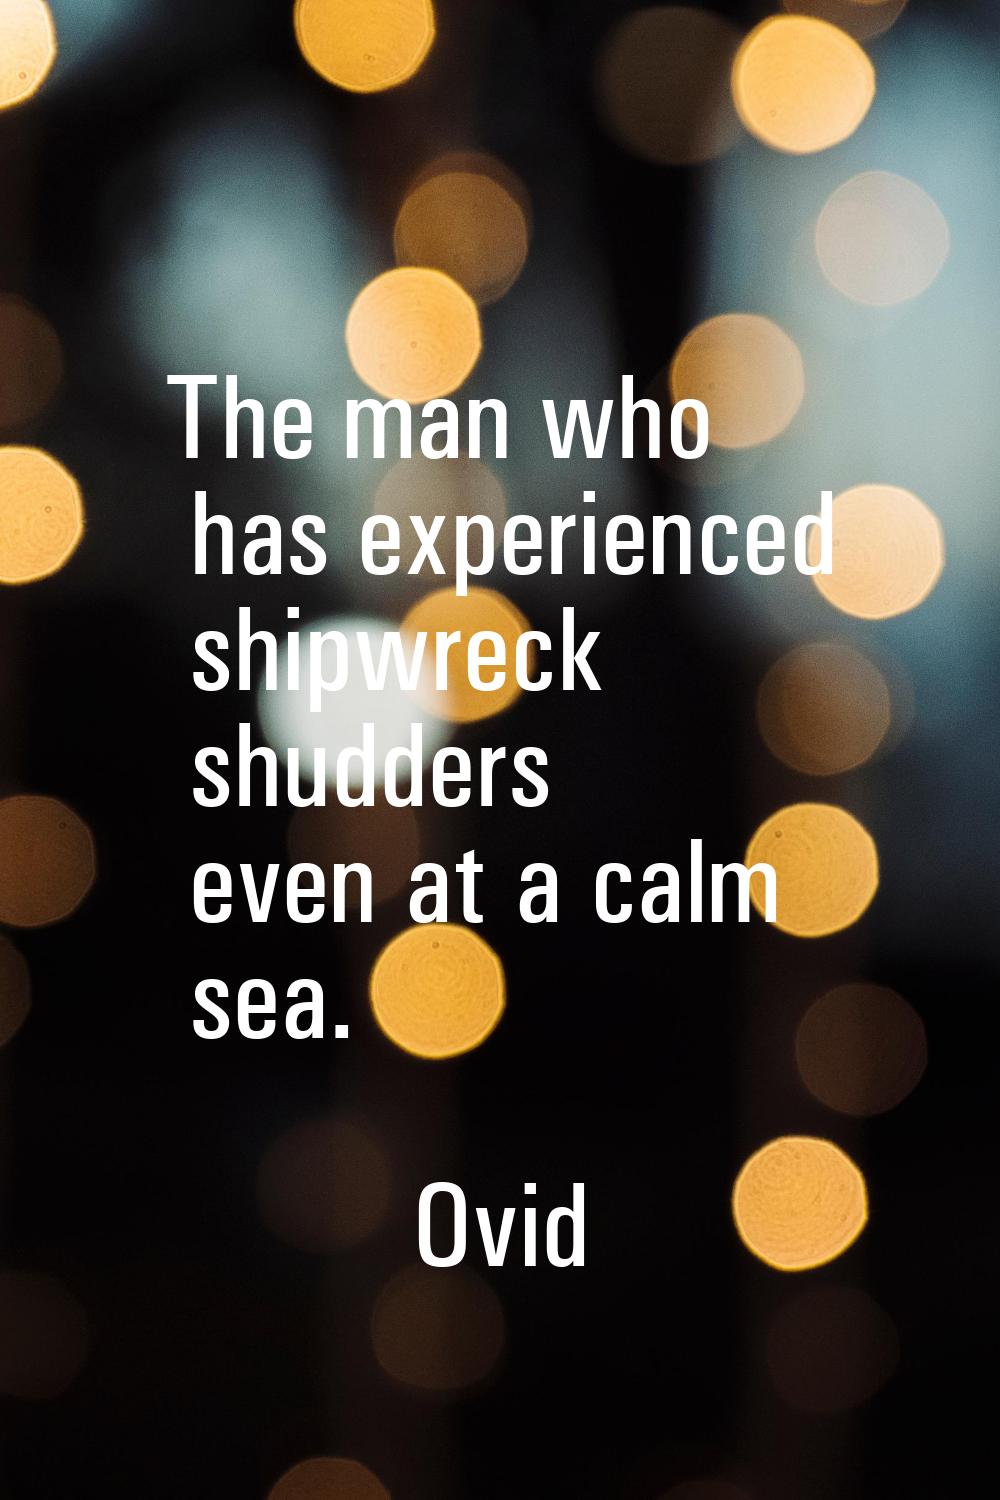 The man who has experienced shipwreck shudders even at a calm sea.